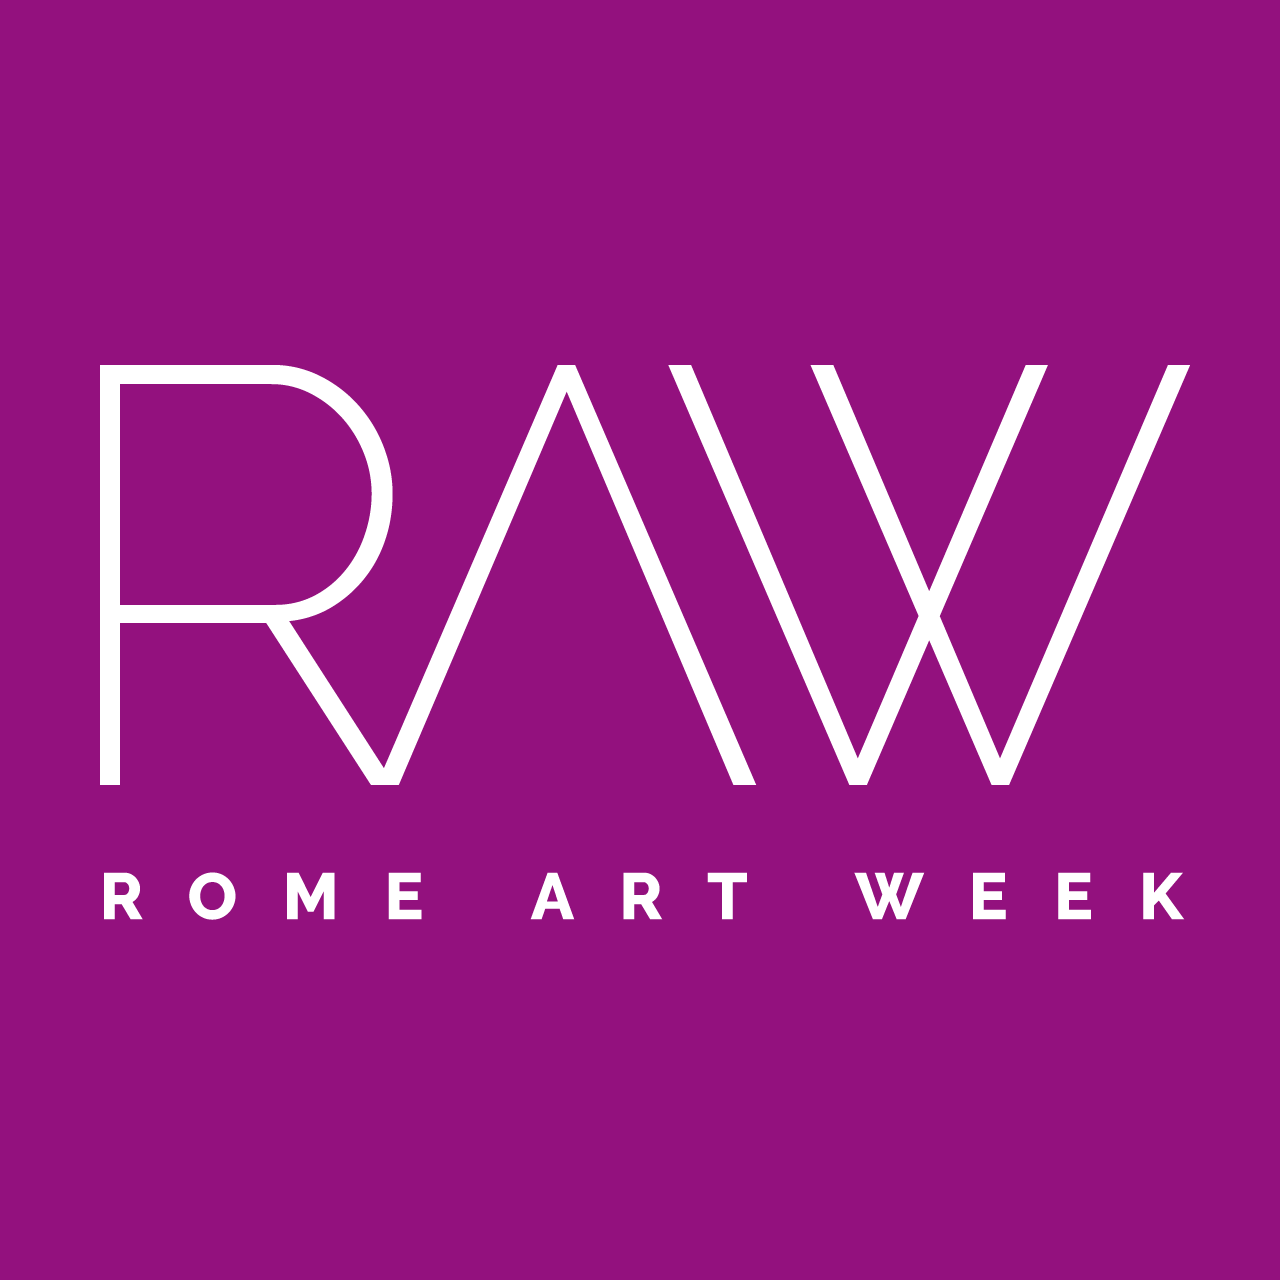 Rome Art Week. Promozione e opportunità per l’arte capitolina